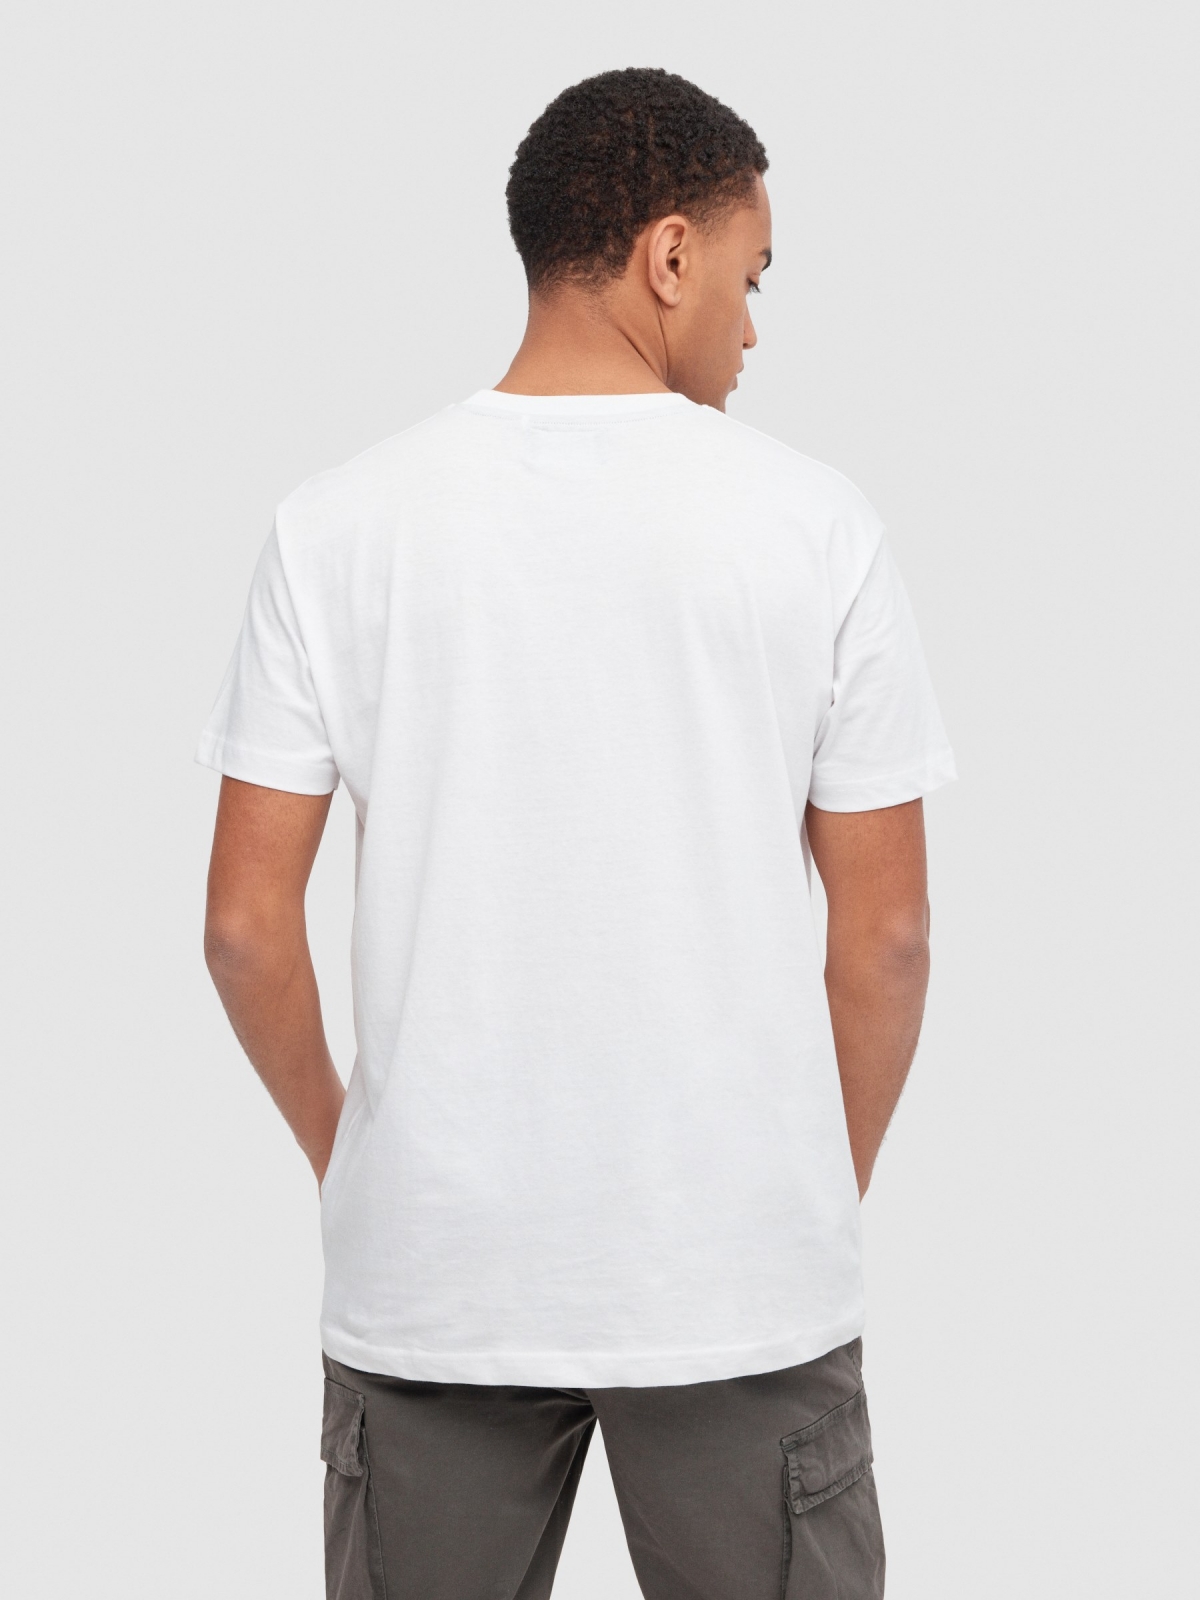 Camiseta básica manga corta blanco vista media trasera